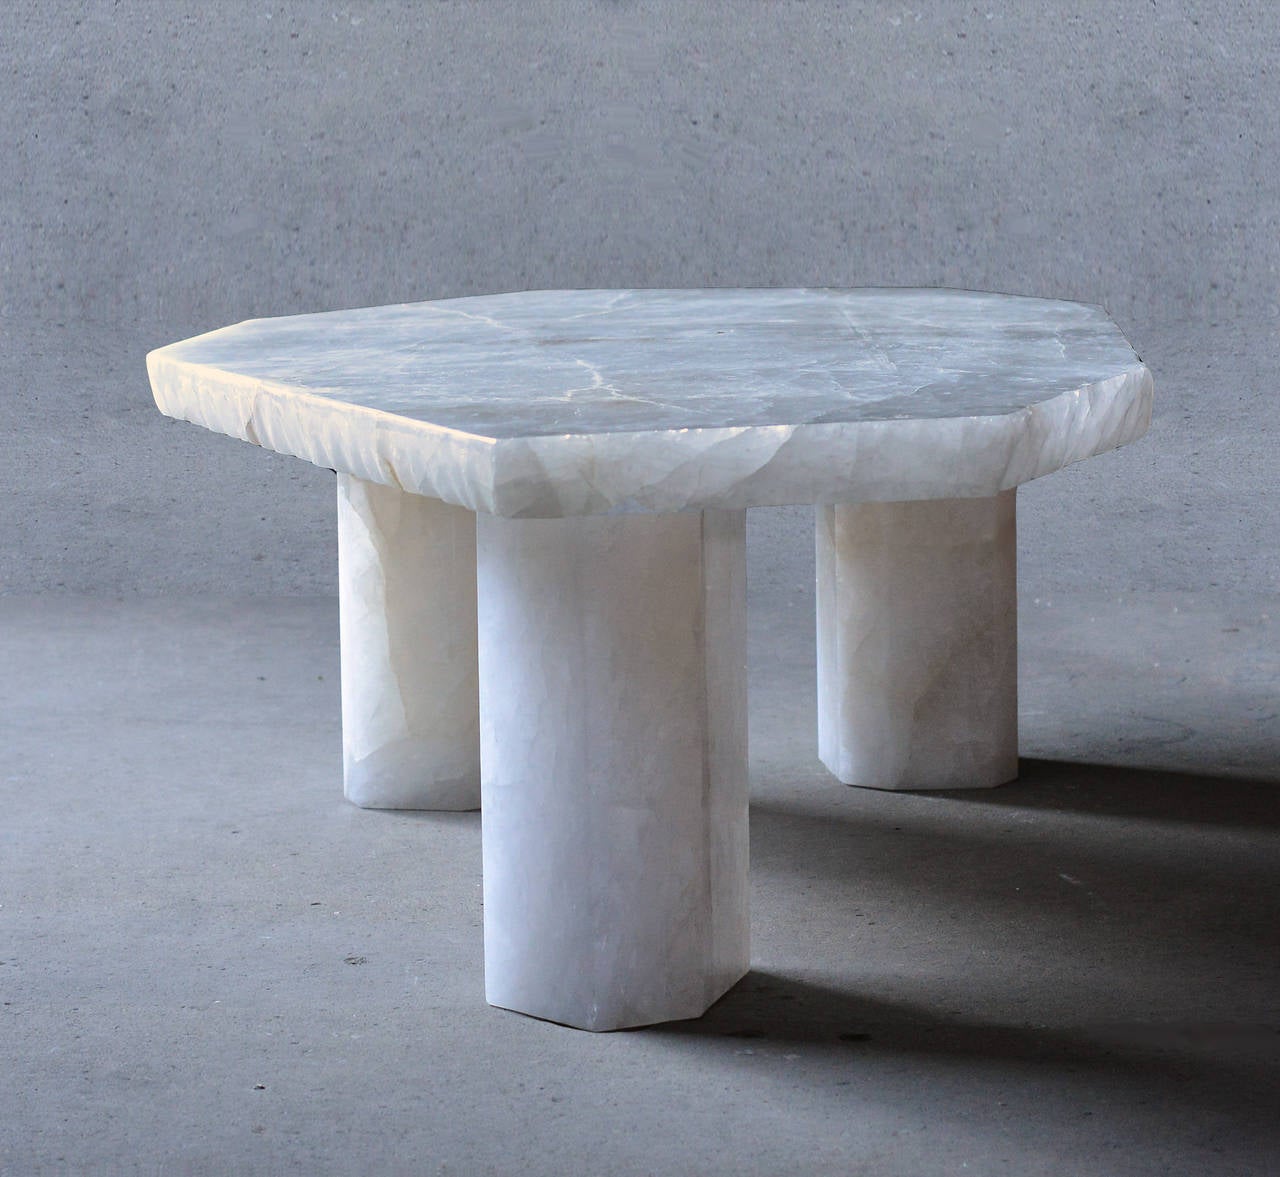 20th Century Polygon Form Rock Crystal Low Table designed by Adam Fuks